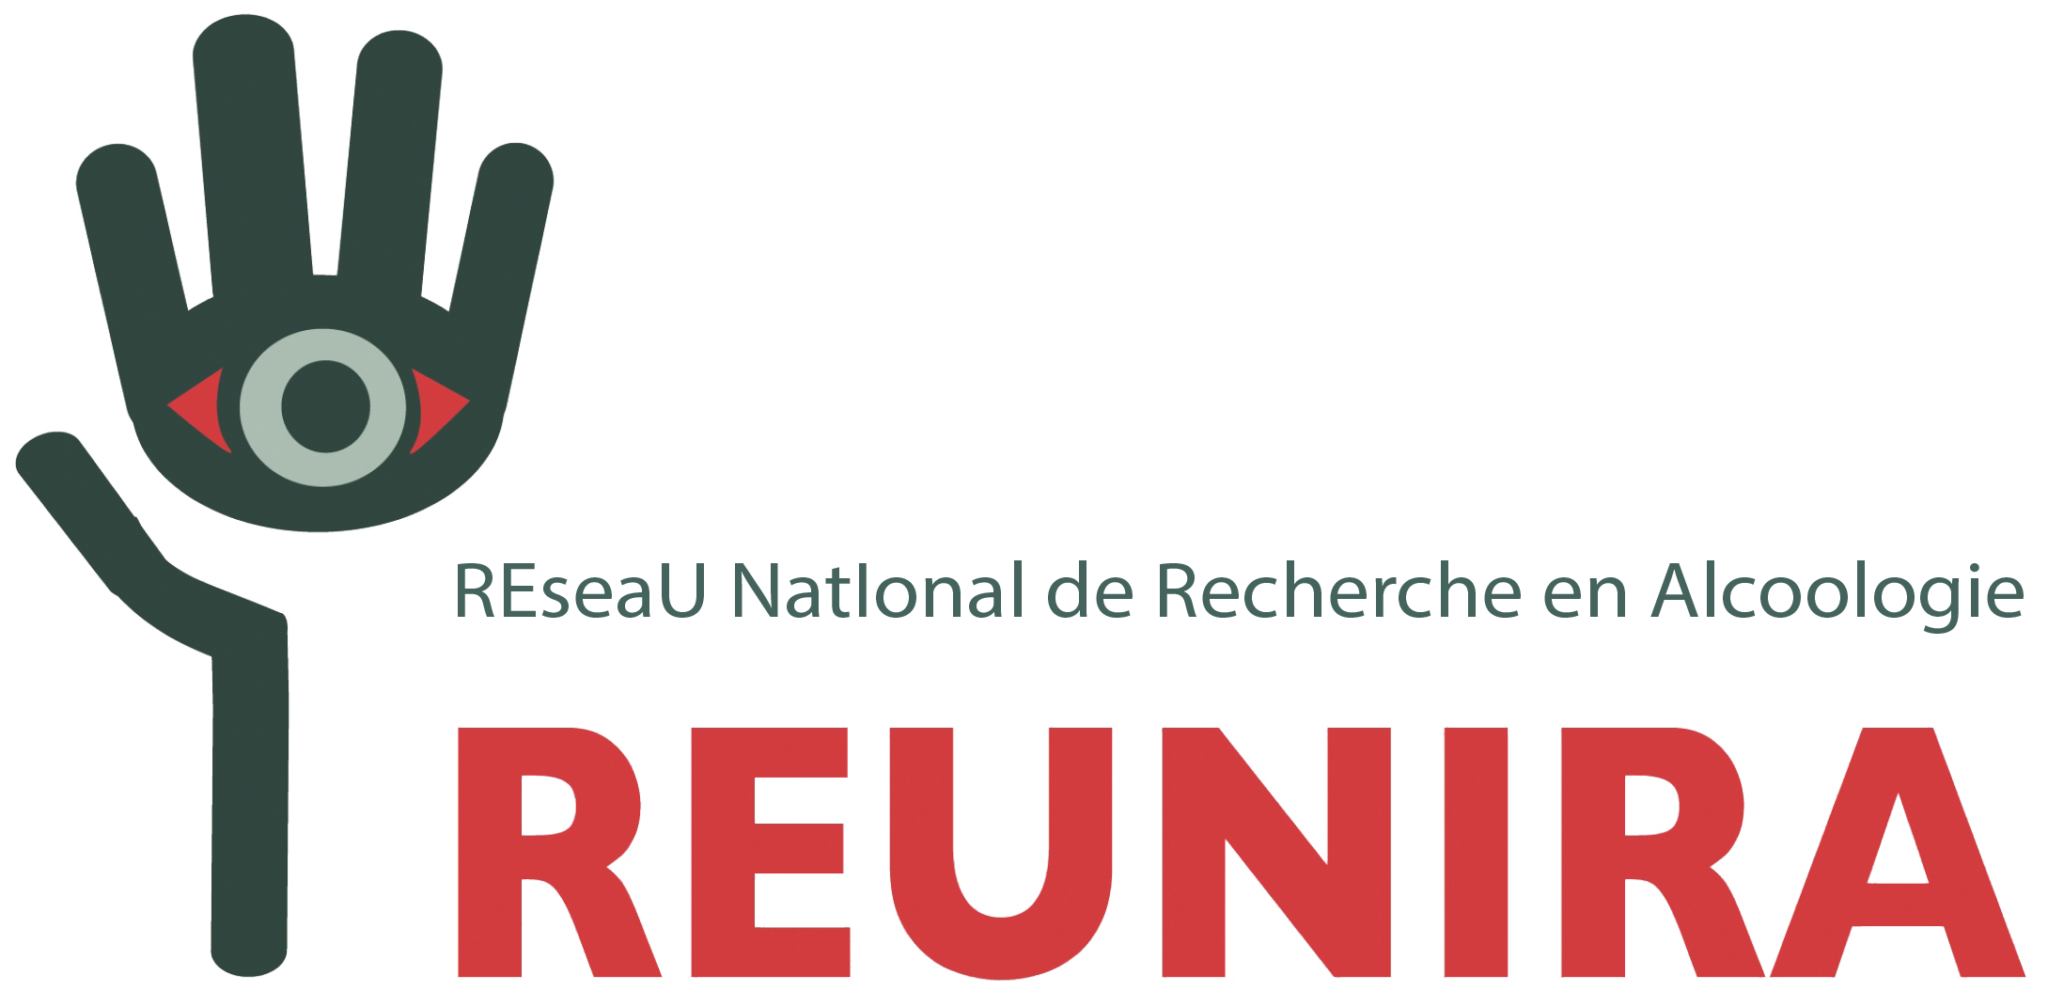 REUNIRA - Réseau national de recherche en alcoologie		